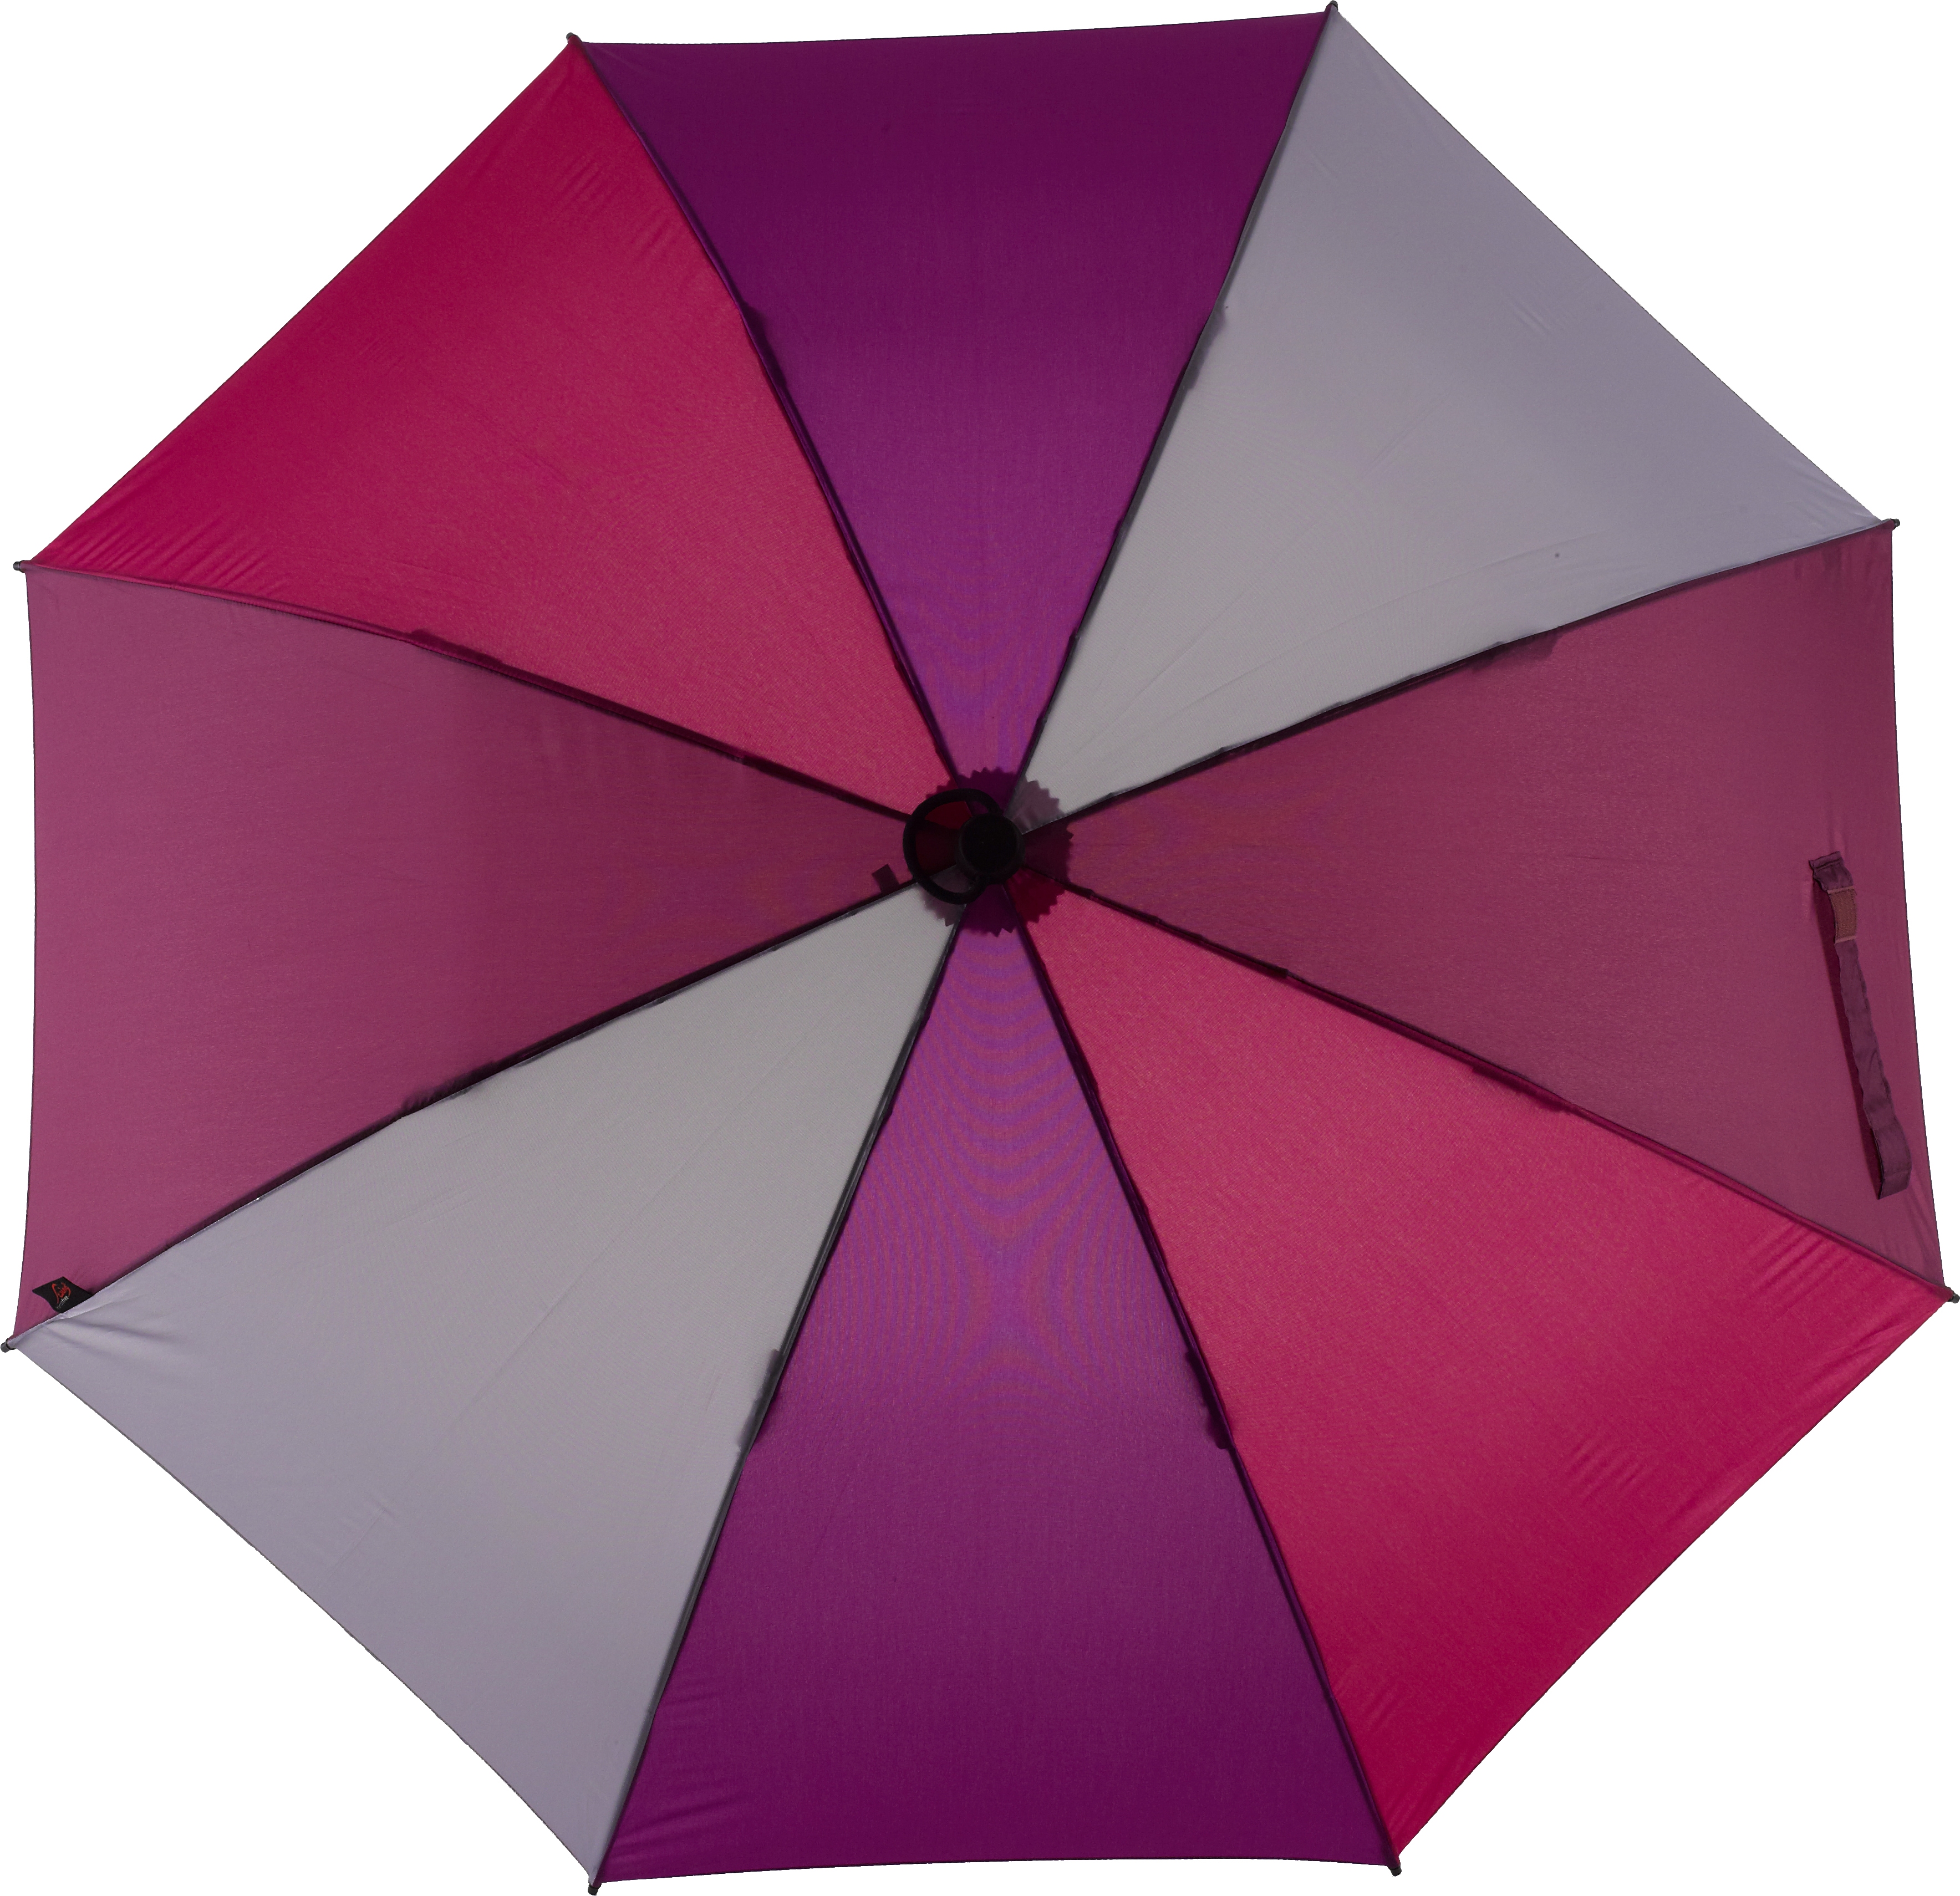 miniatura 16 - Euro ombrello Swing Liteflex Trekking OMBRELLONE ombrello speciale schermo TOP